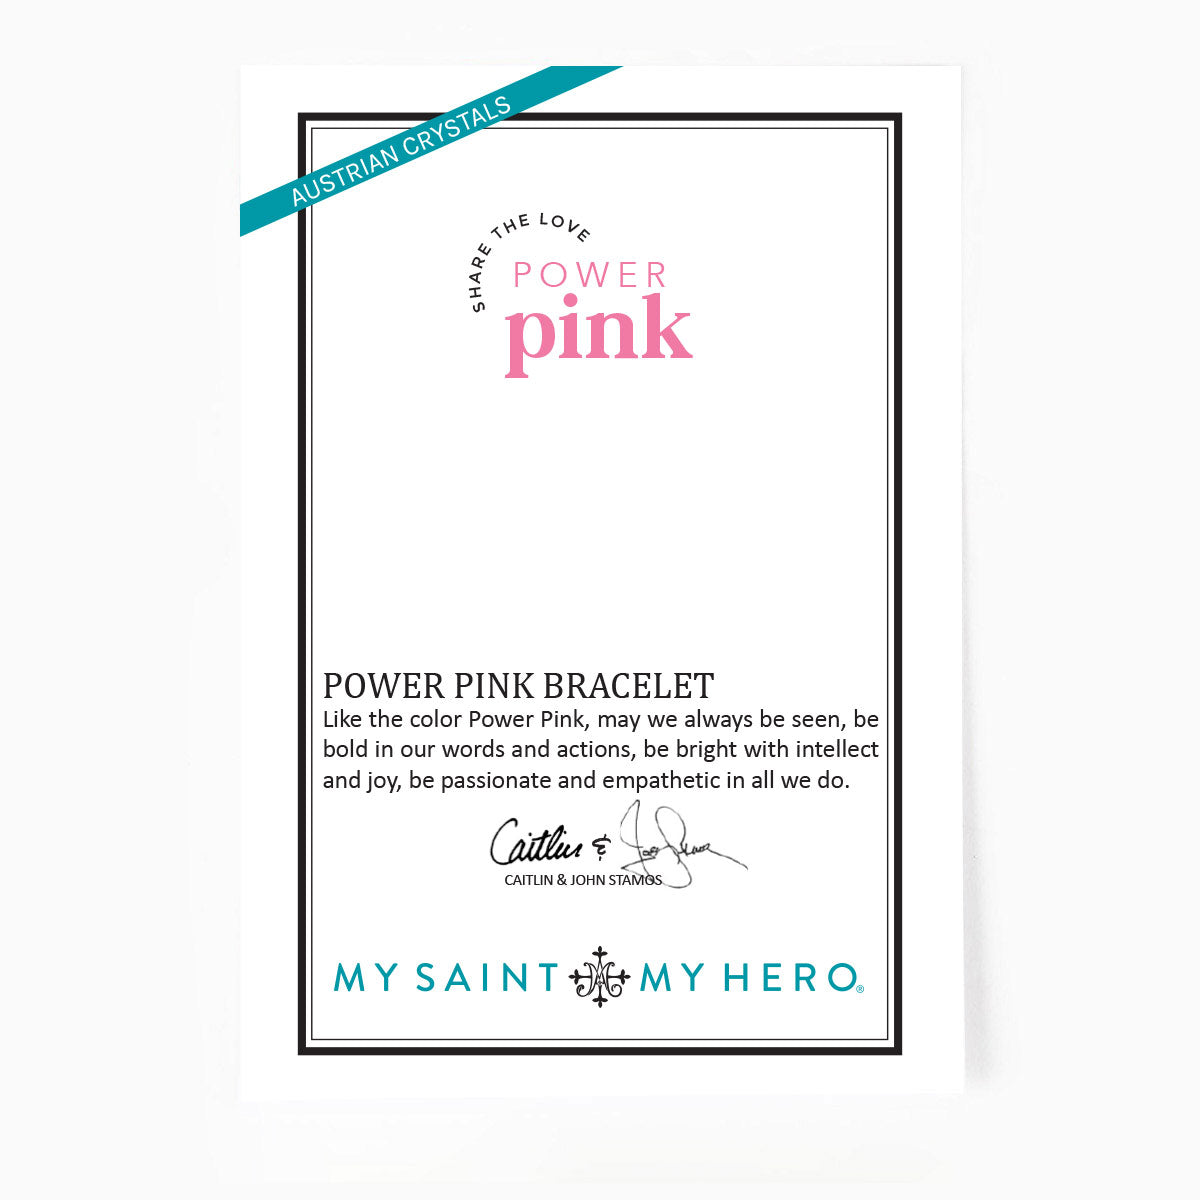 Share the Love Power Pink Bracelet by My Saint My Hero